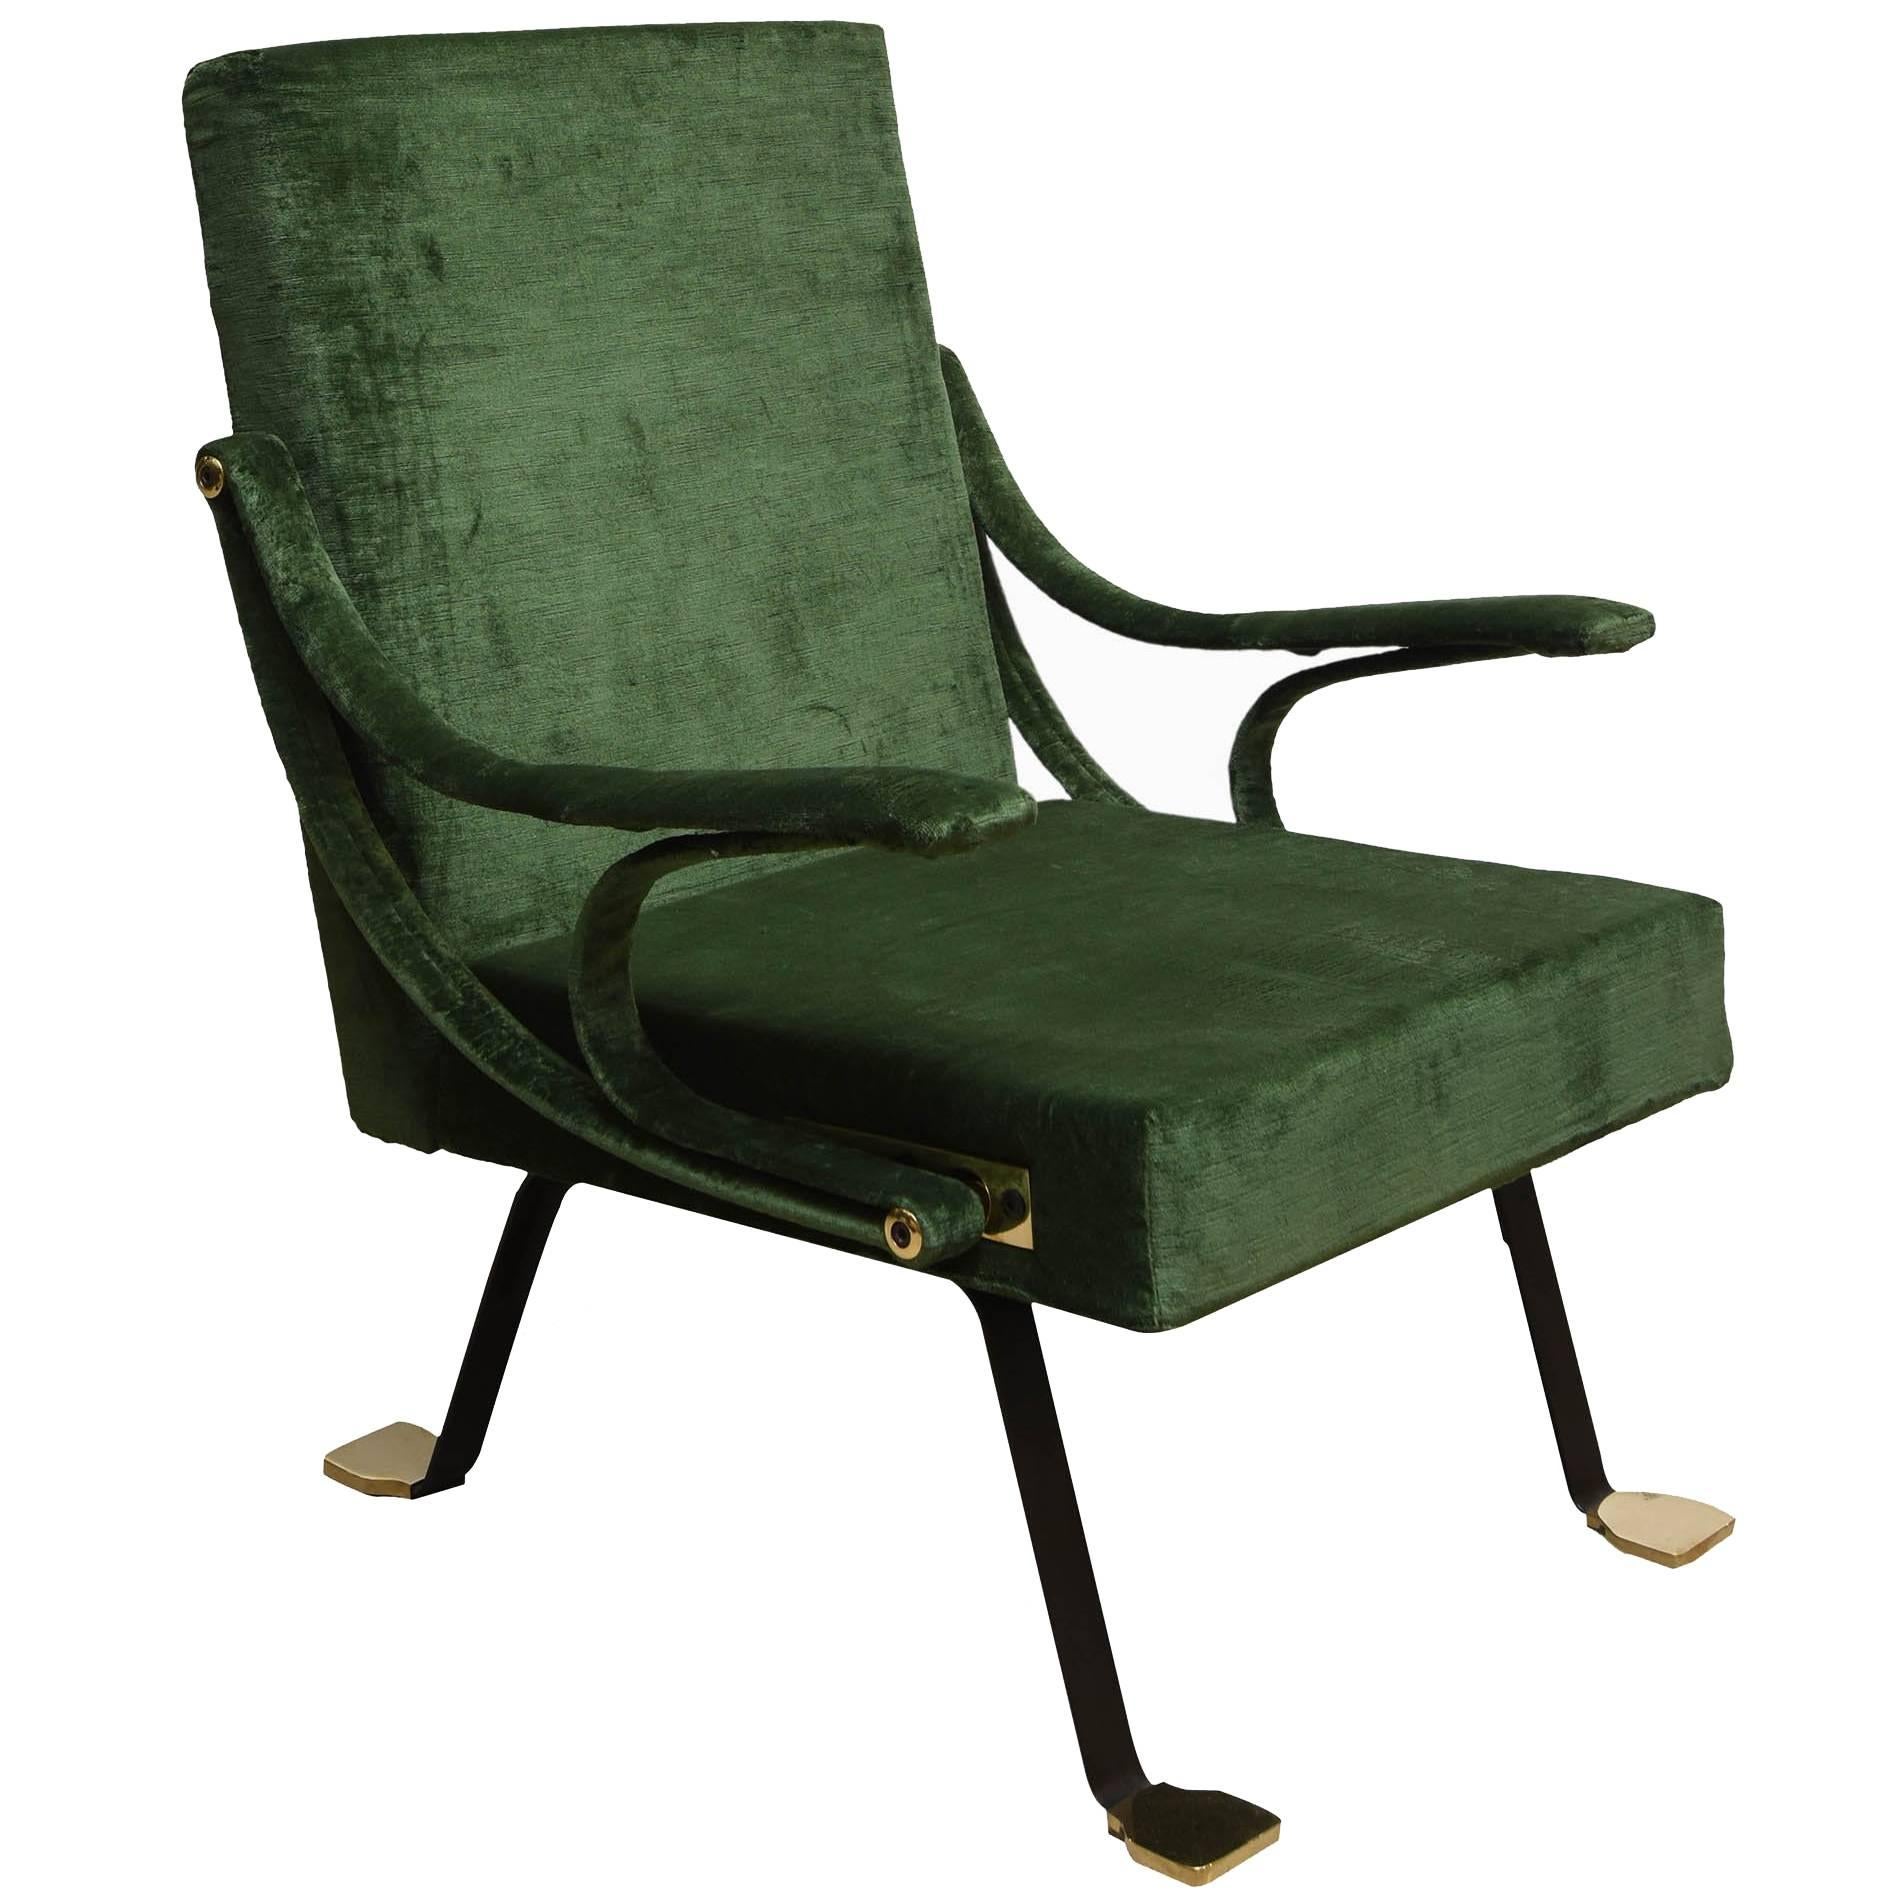  Ignazio Gardella "Digamma" Green Velvet Italian Armchair for Gavina, 1957 For Sale